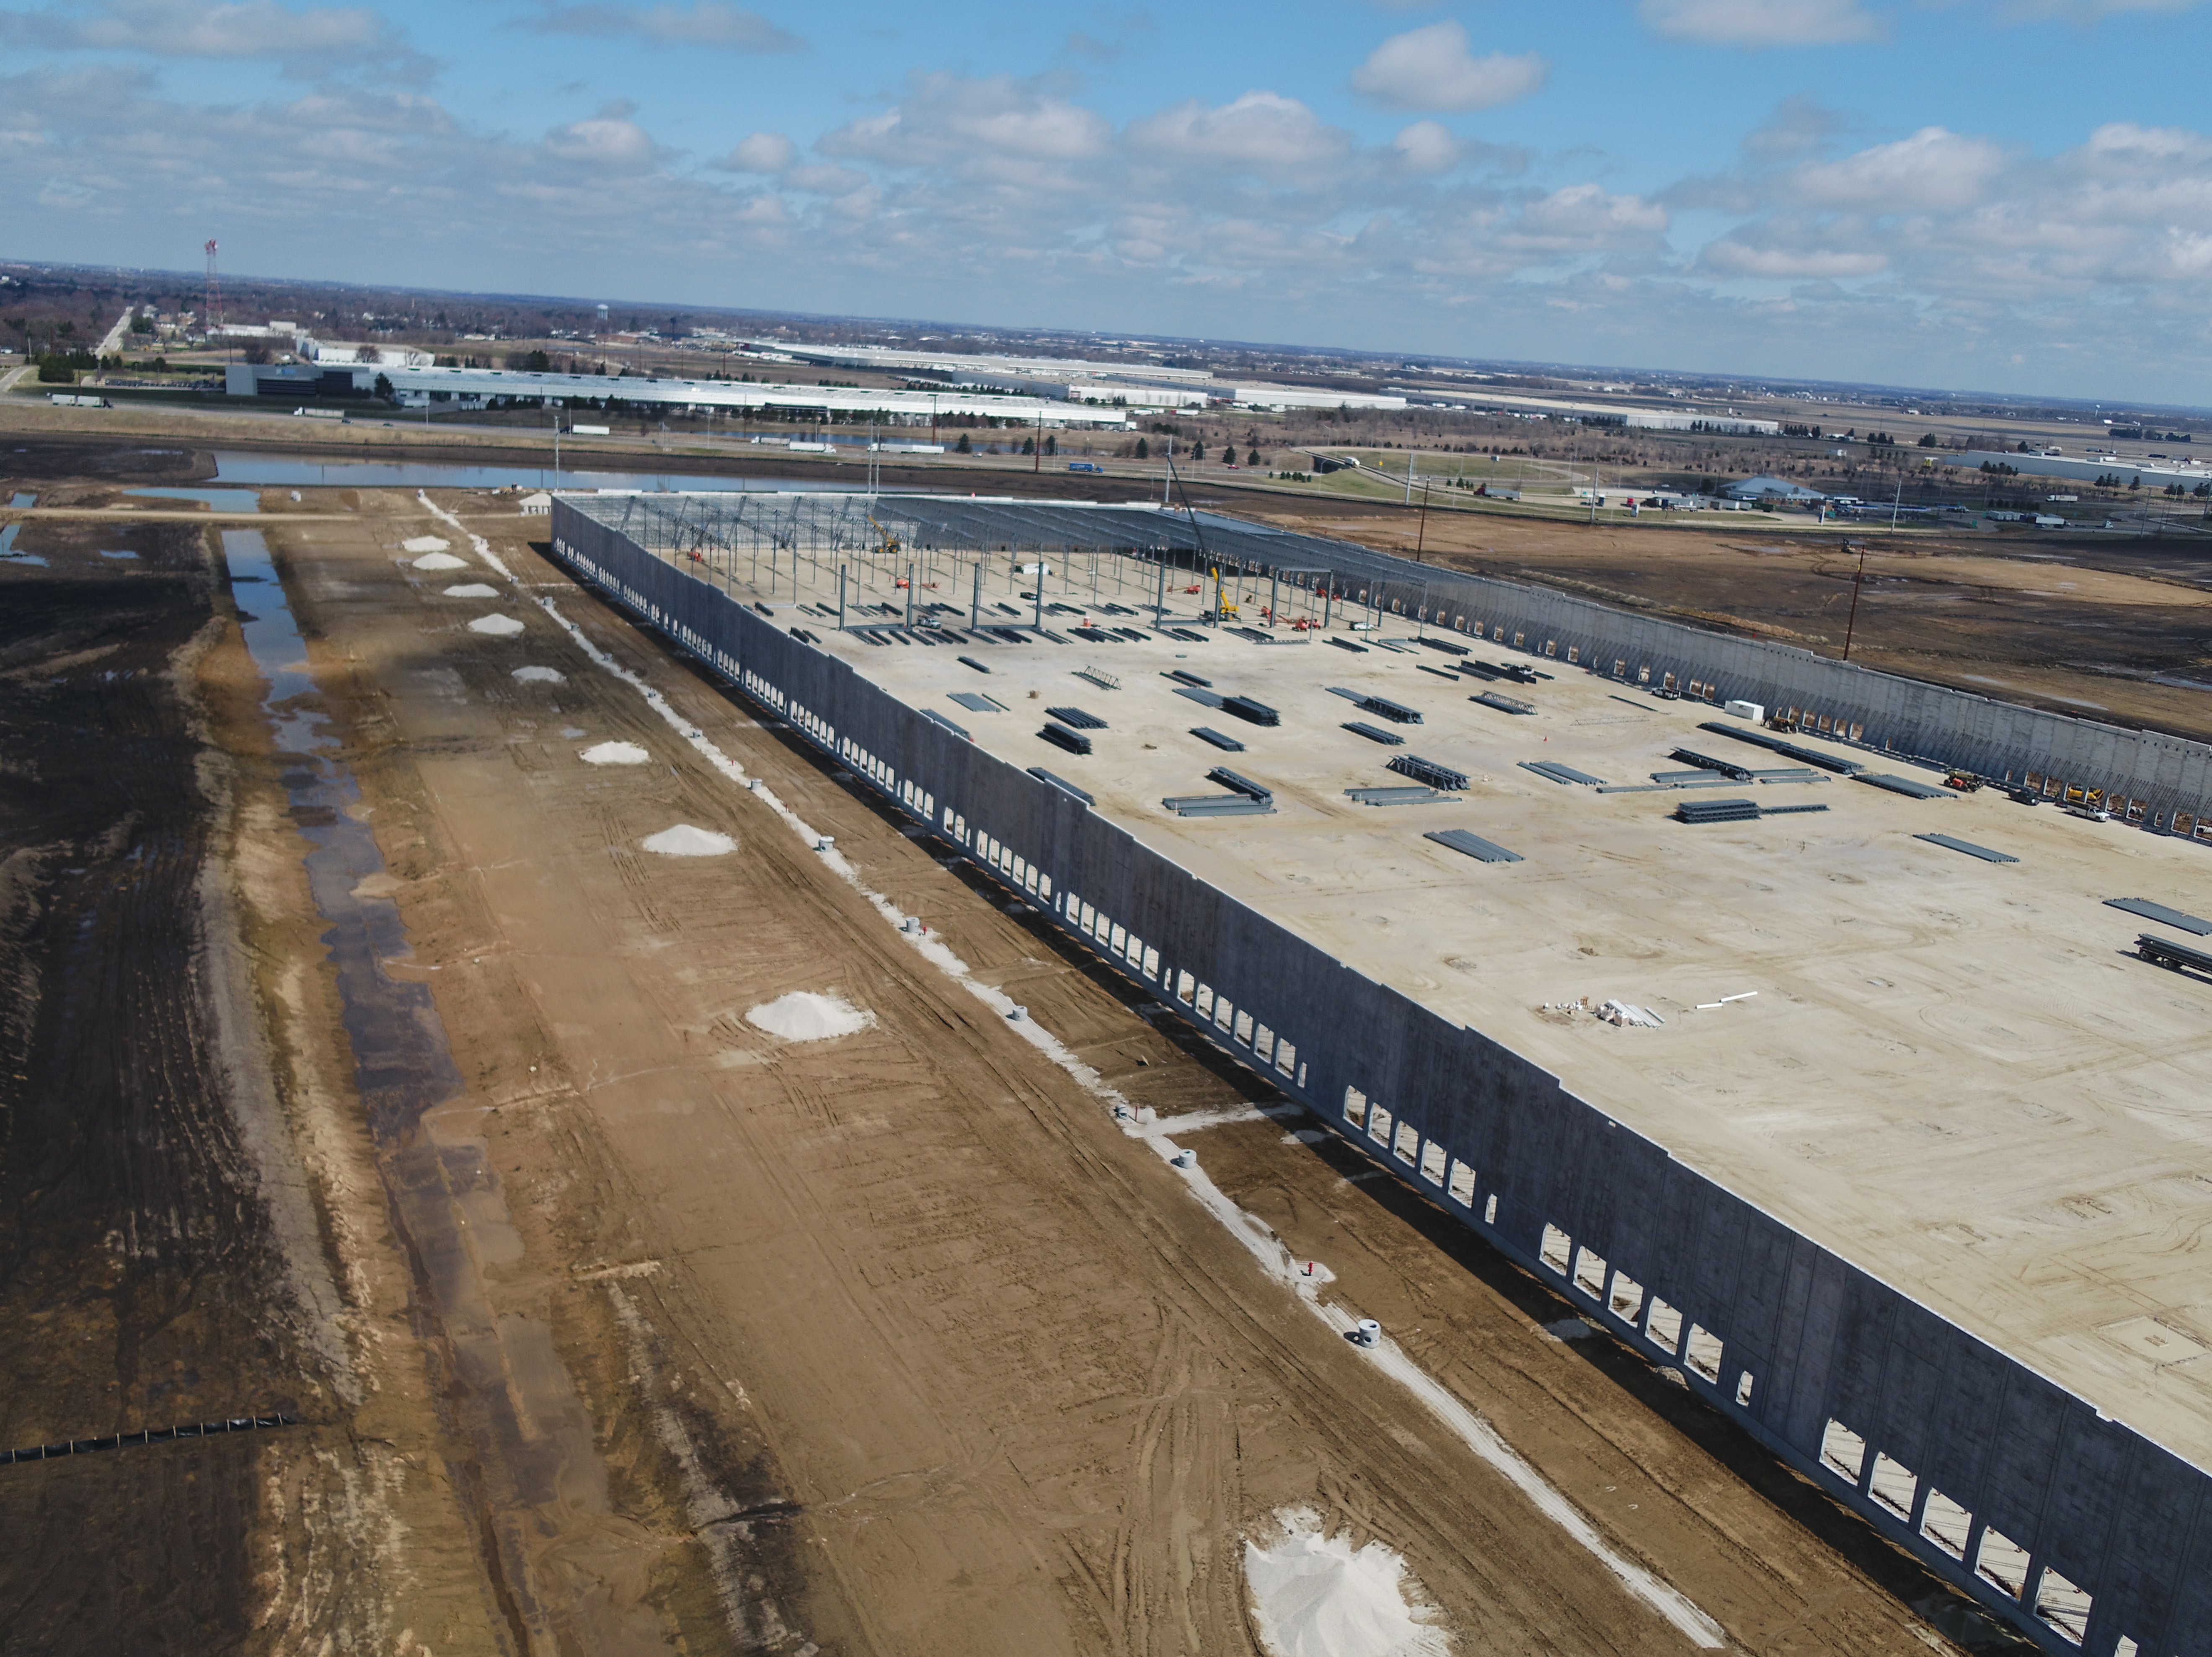 1.2M SF warehouse in DeKalb, Illinois